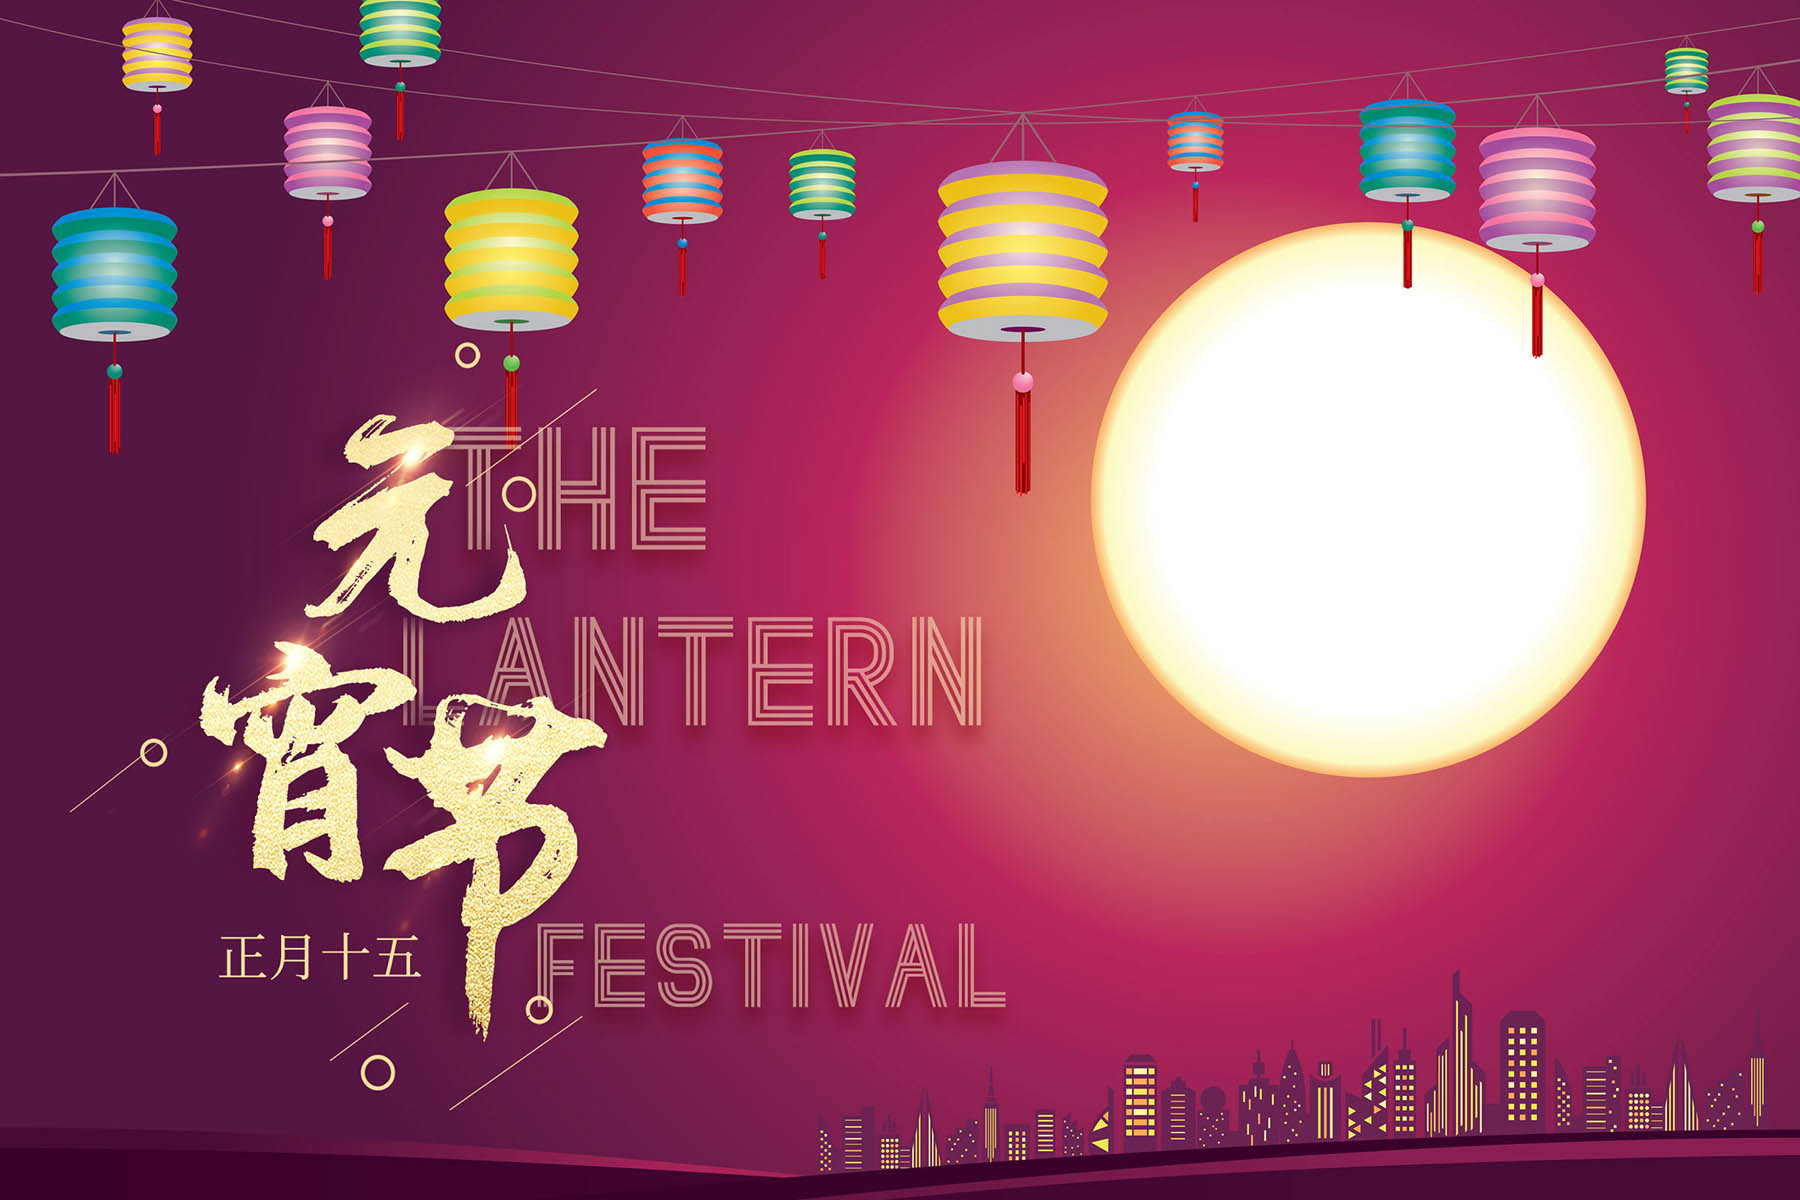 Happy Lantern Festival！